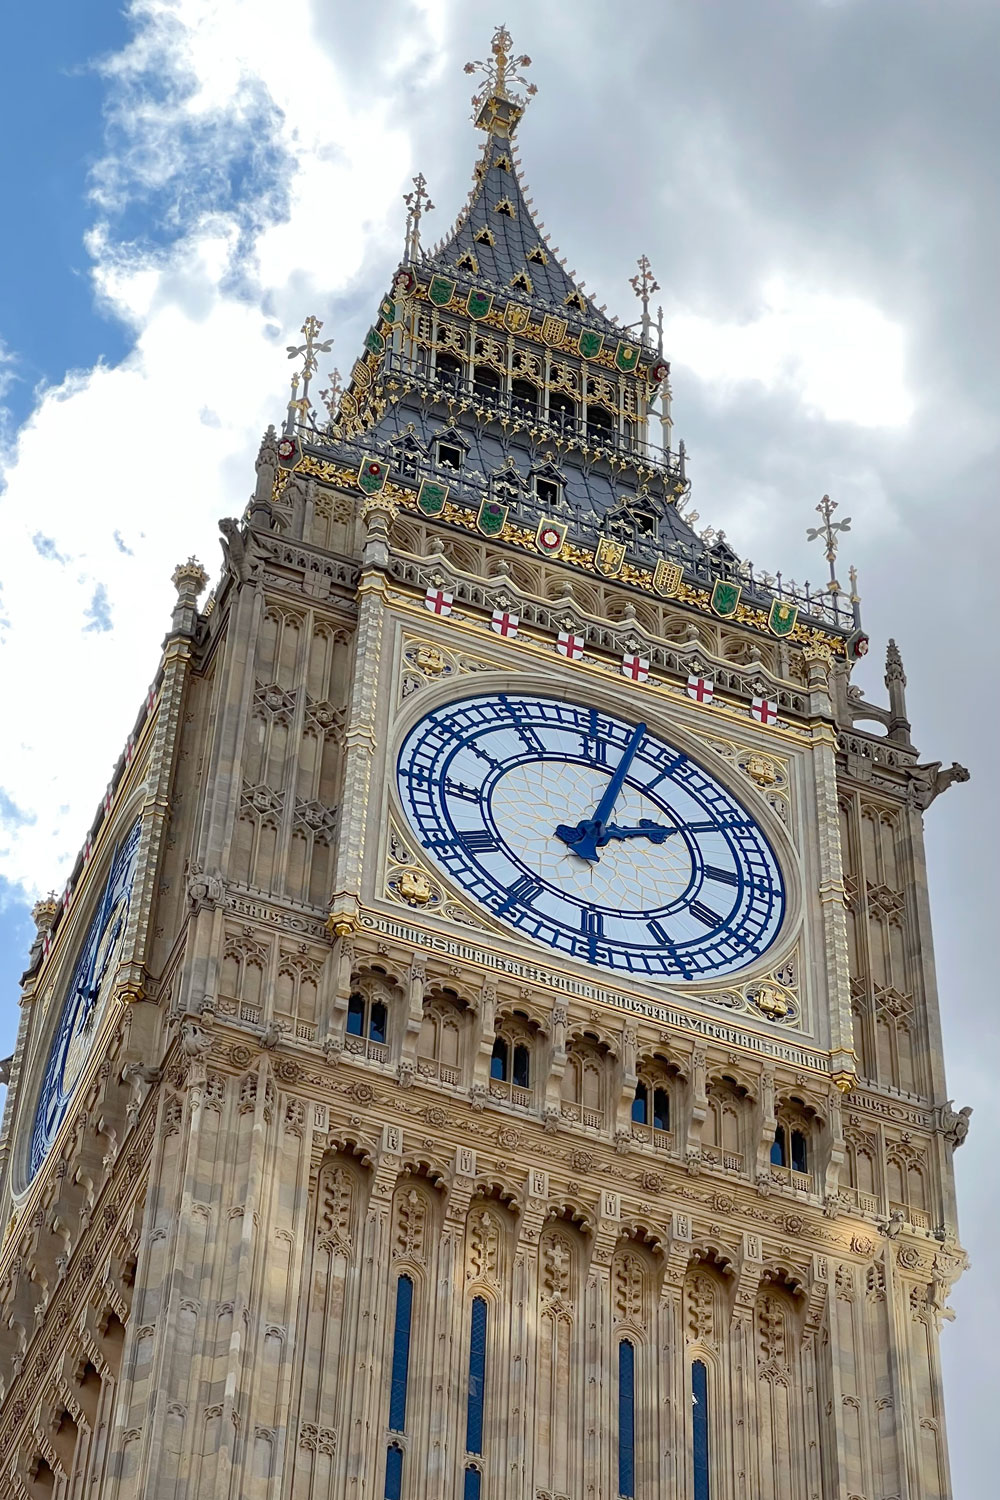 London Big Ben clock tower in England